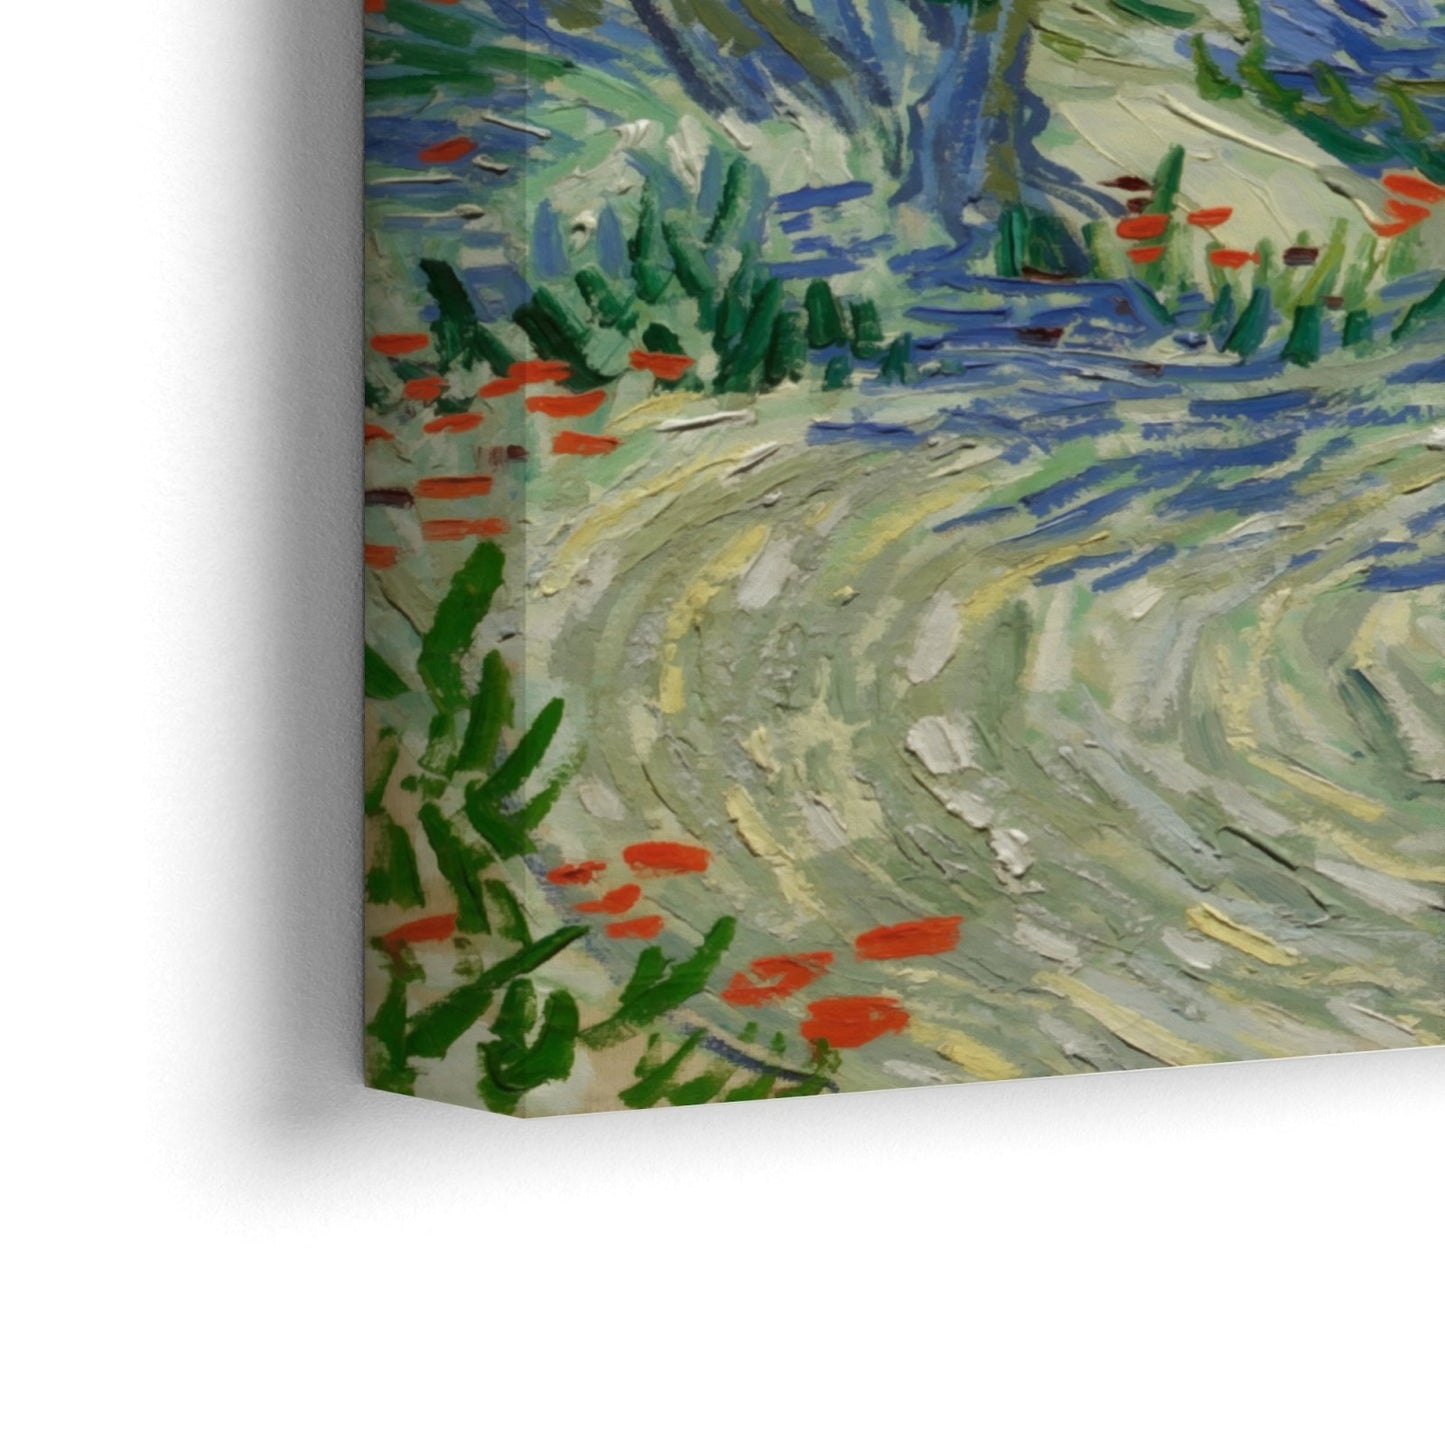 Verger d'oliviers 1889, Vincent Van Gogh